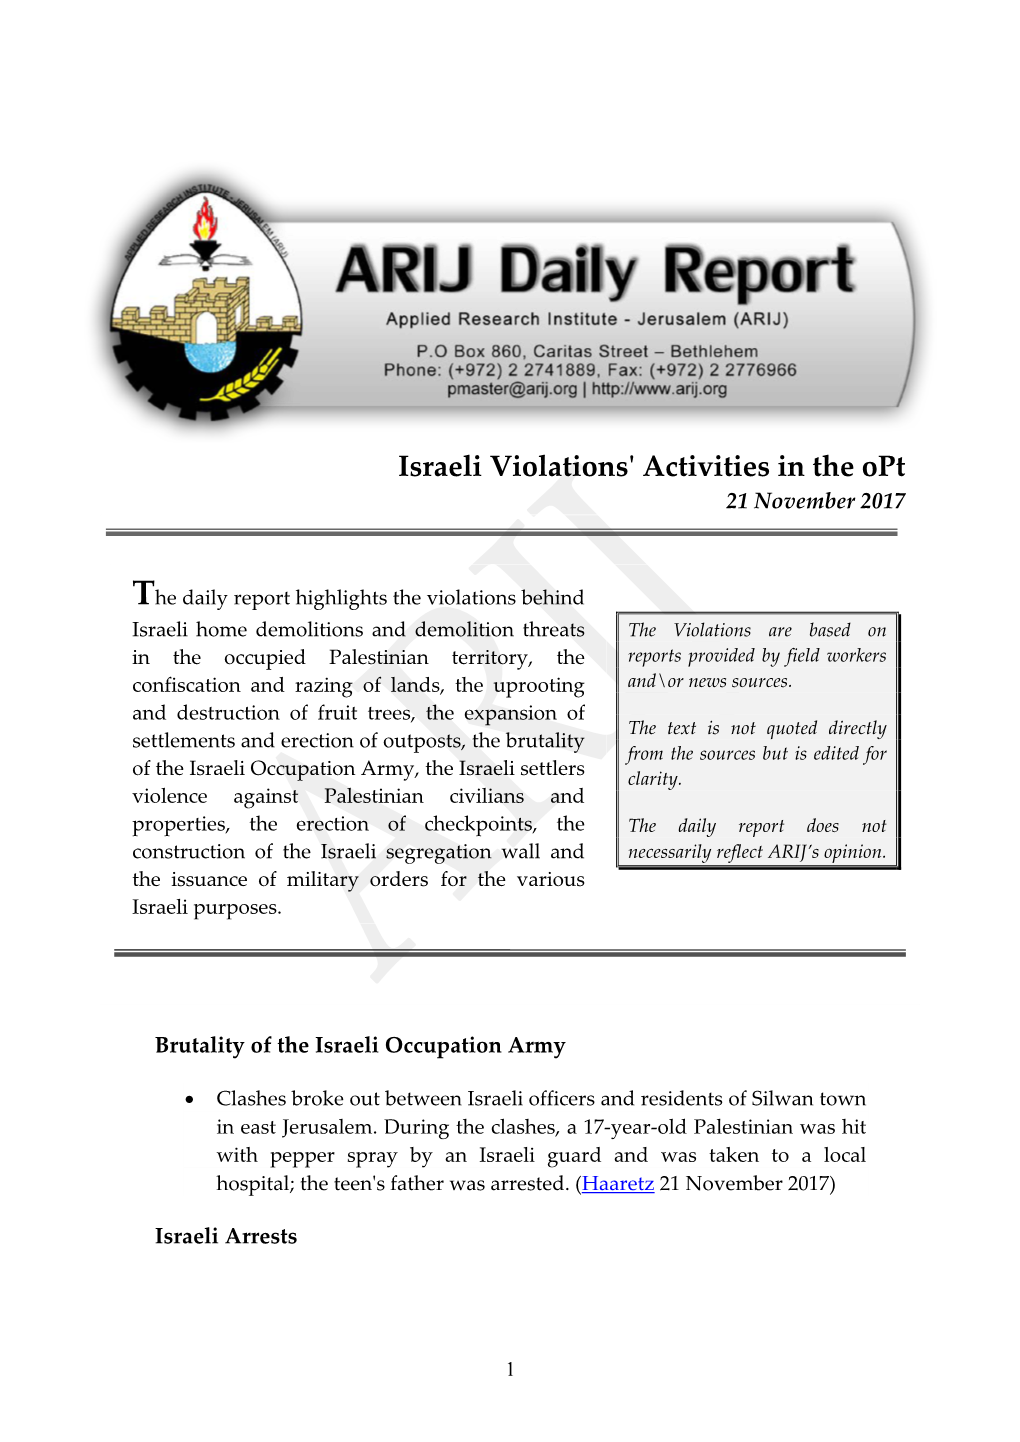 Israeli Violations' Activities in the Opt 21 November 2017